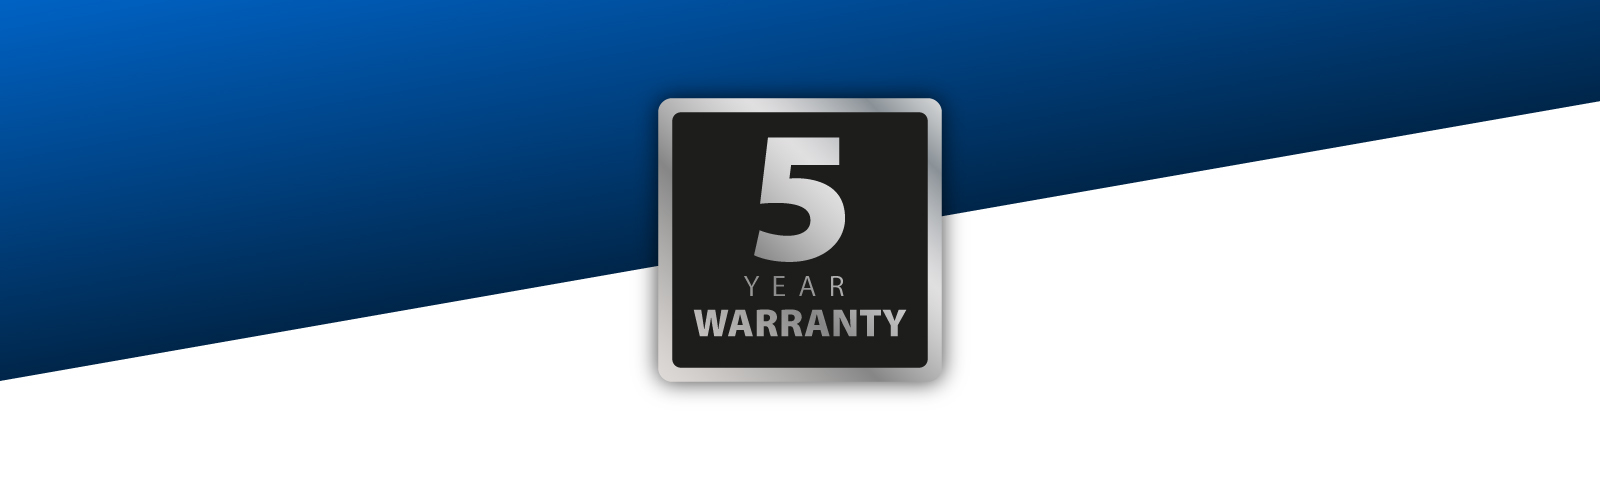 Thorlux 5 Year Warranty